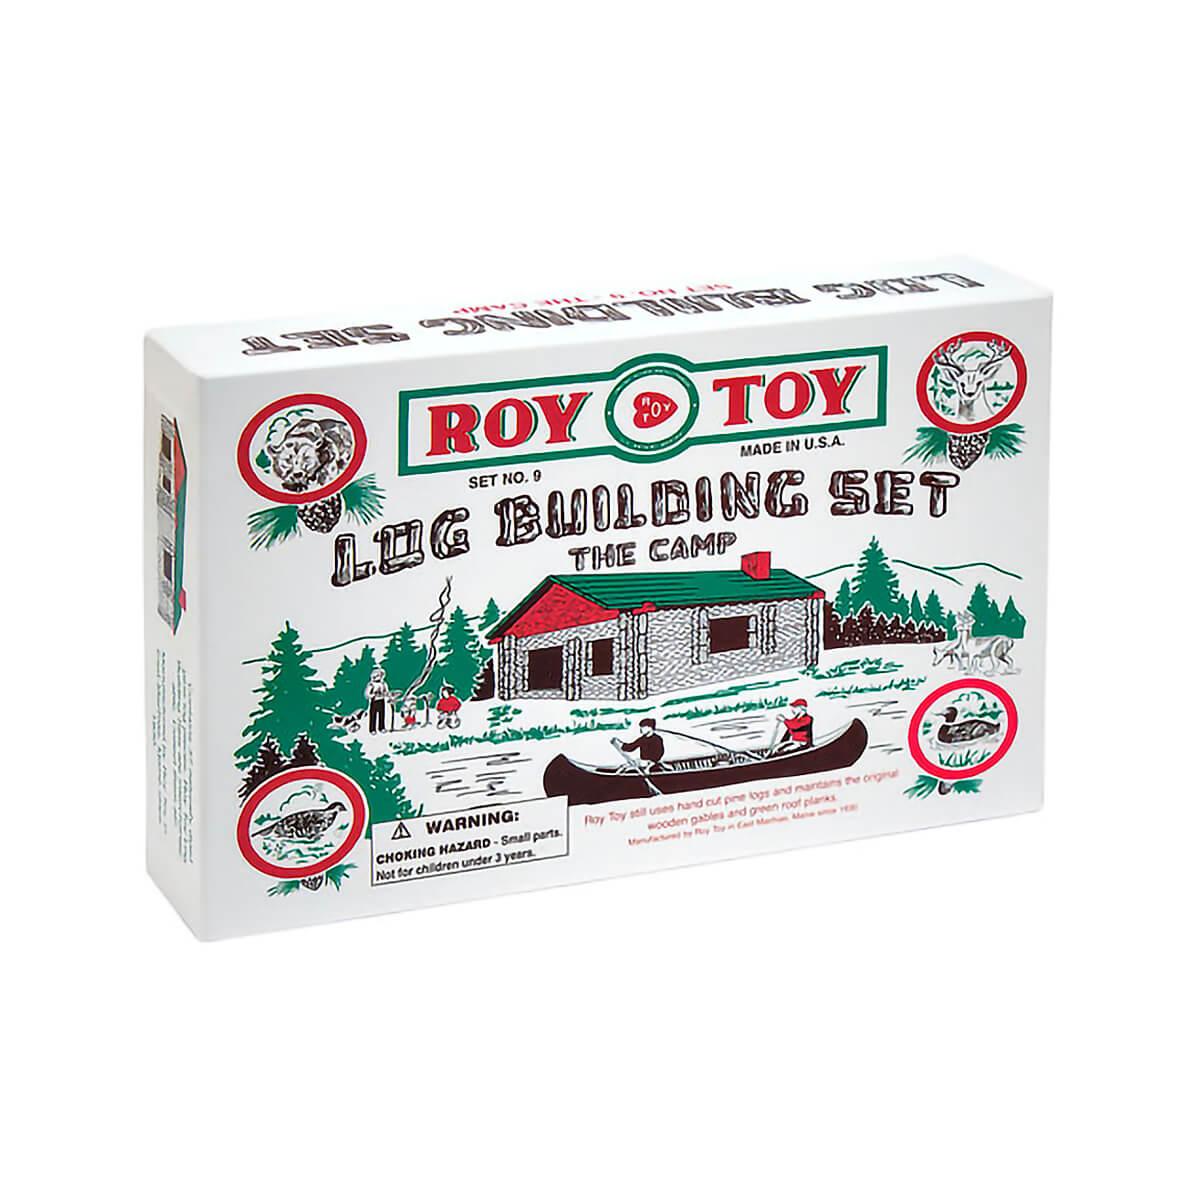  Roy Toy Log Camp In A Box Craft Set